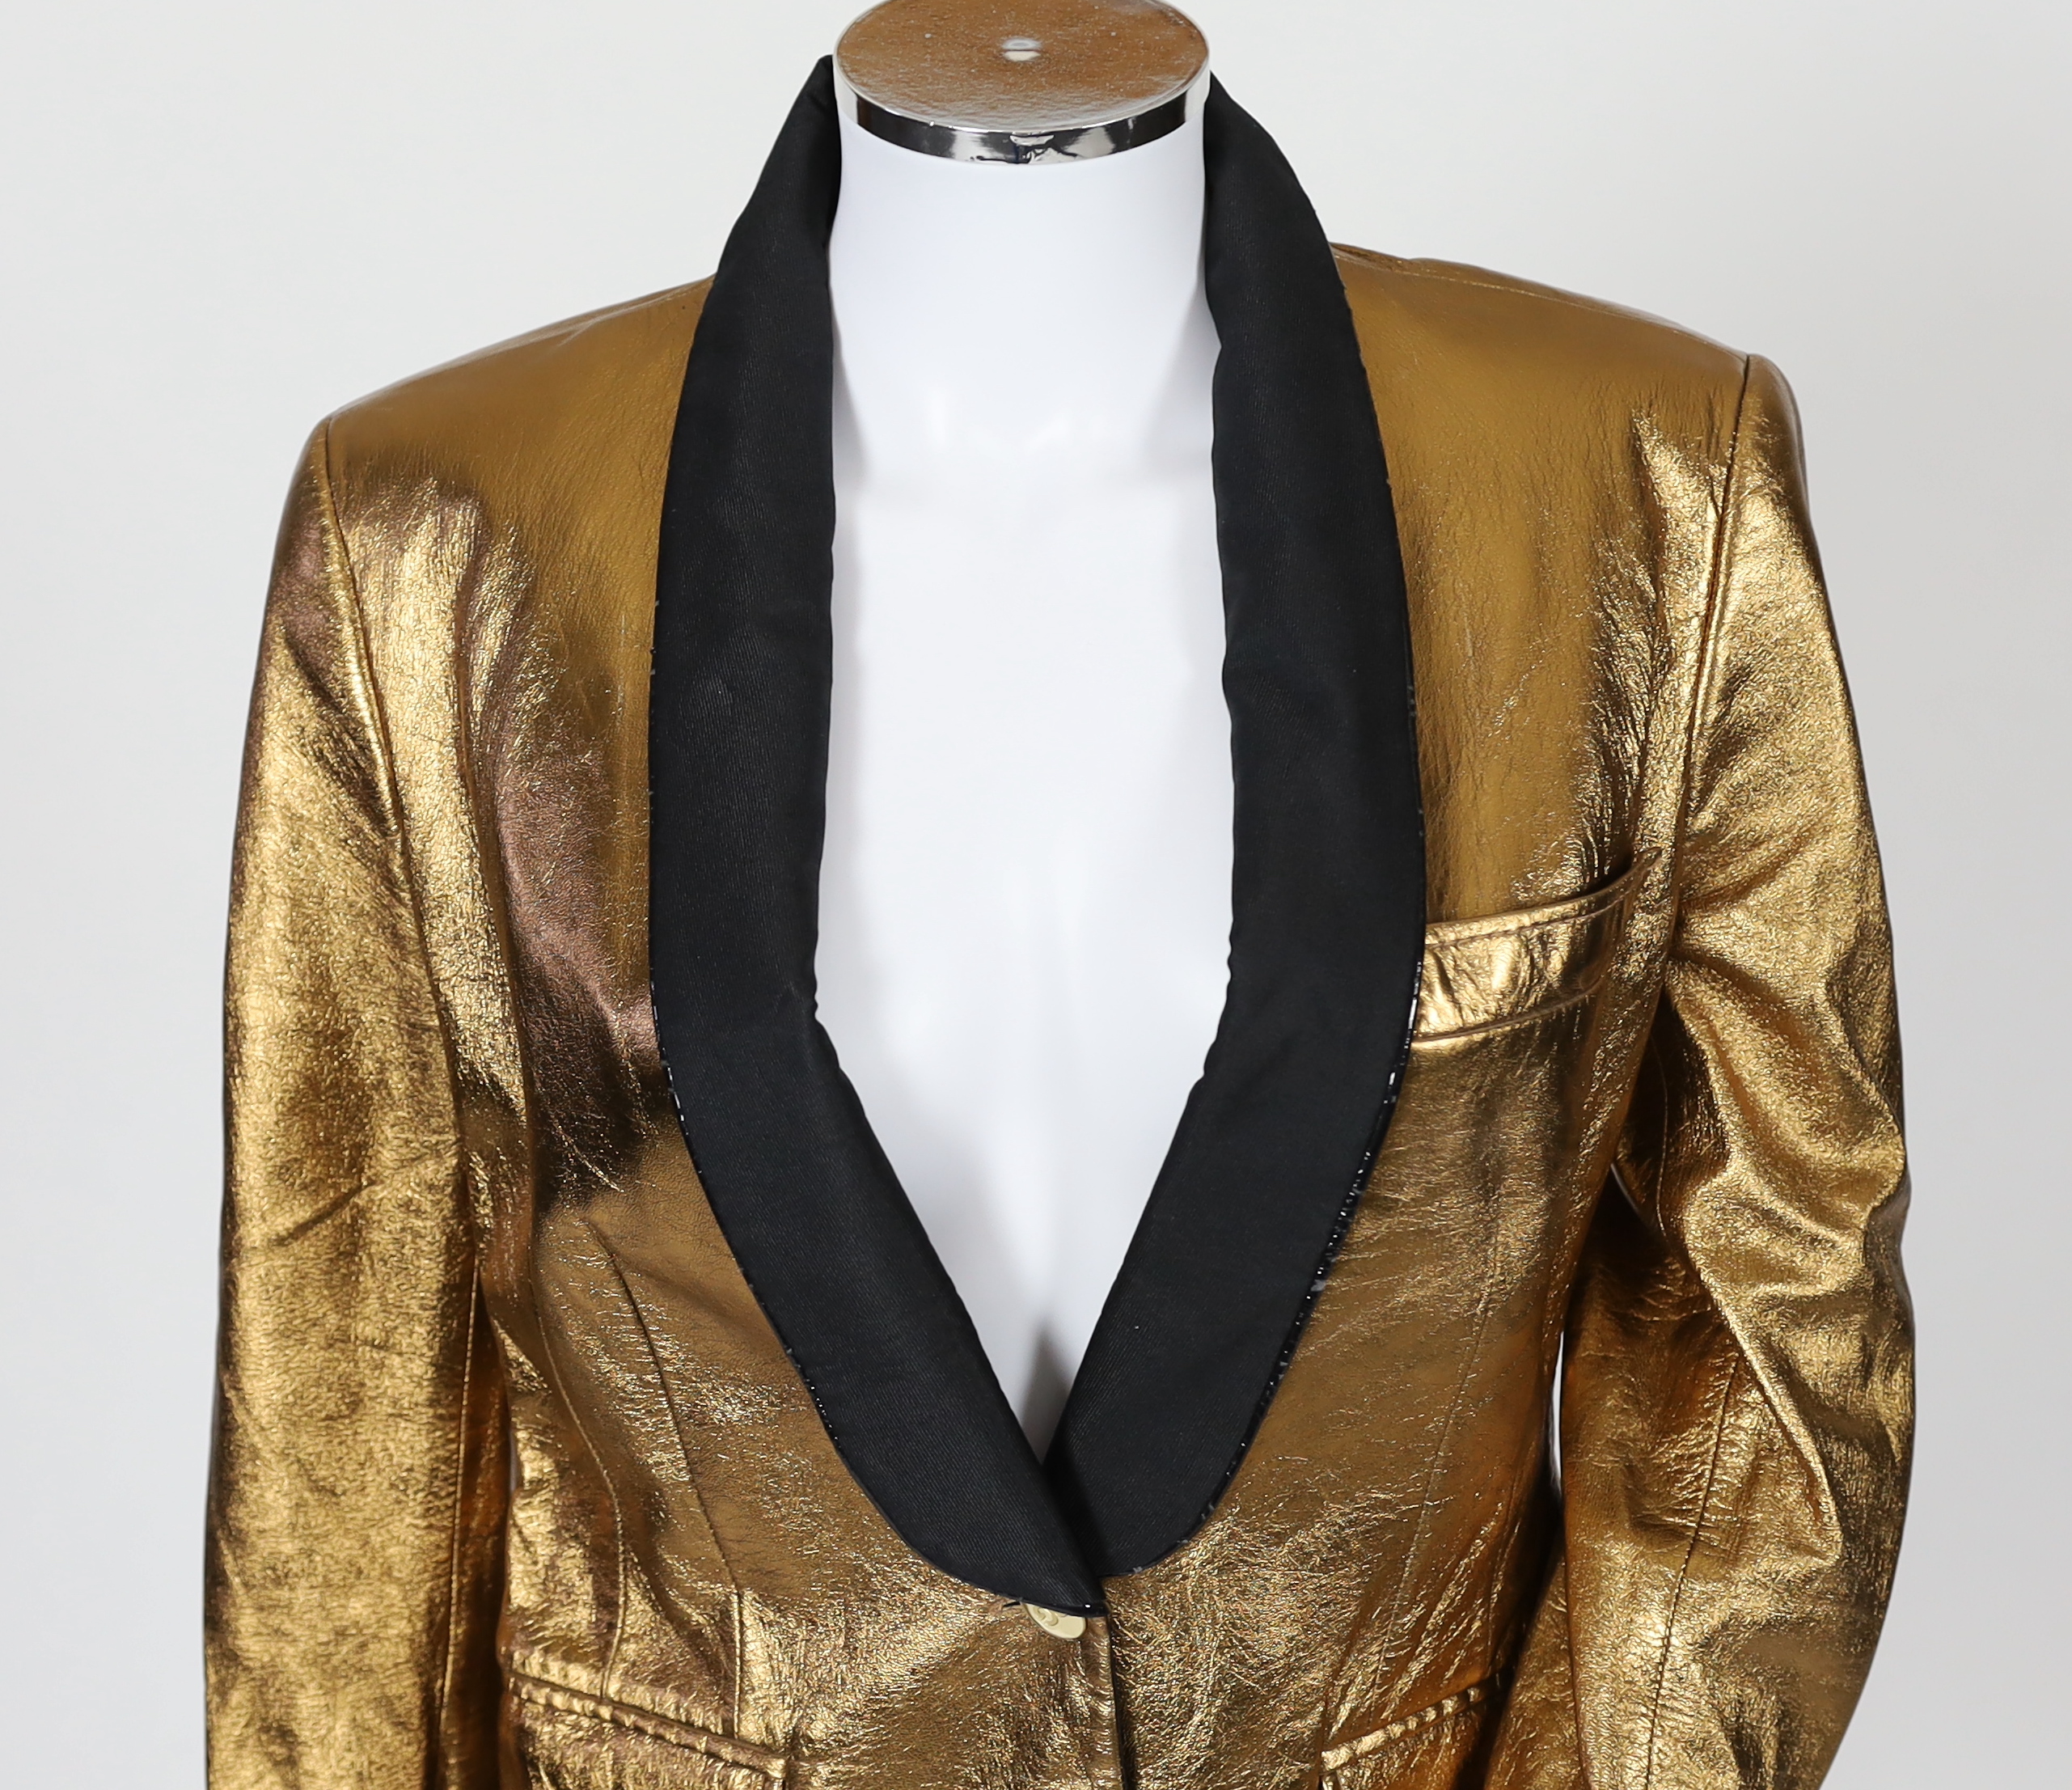 A lady's Dolce & Gabbana gold metallic leather jacket, size 42